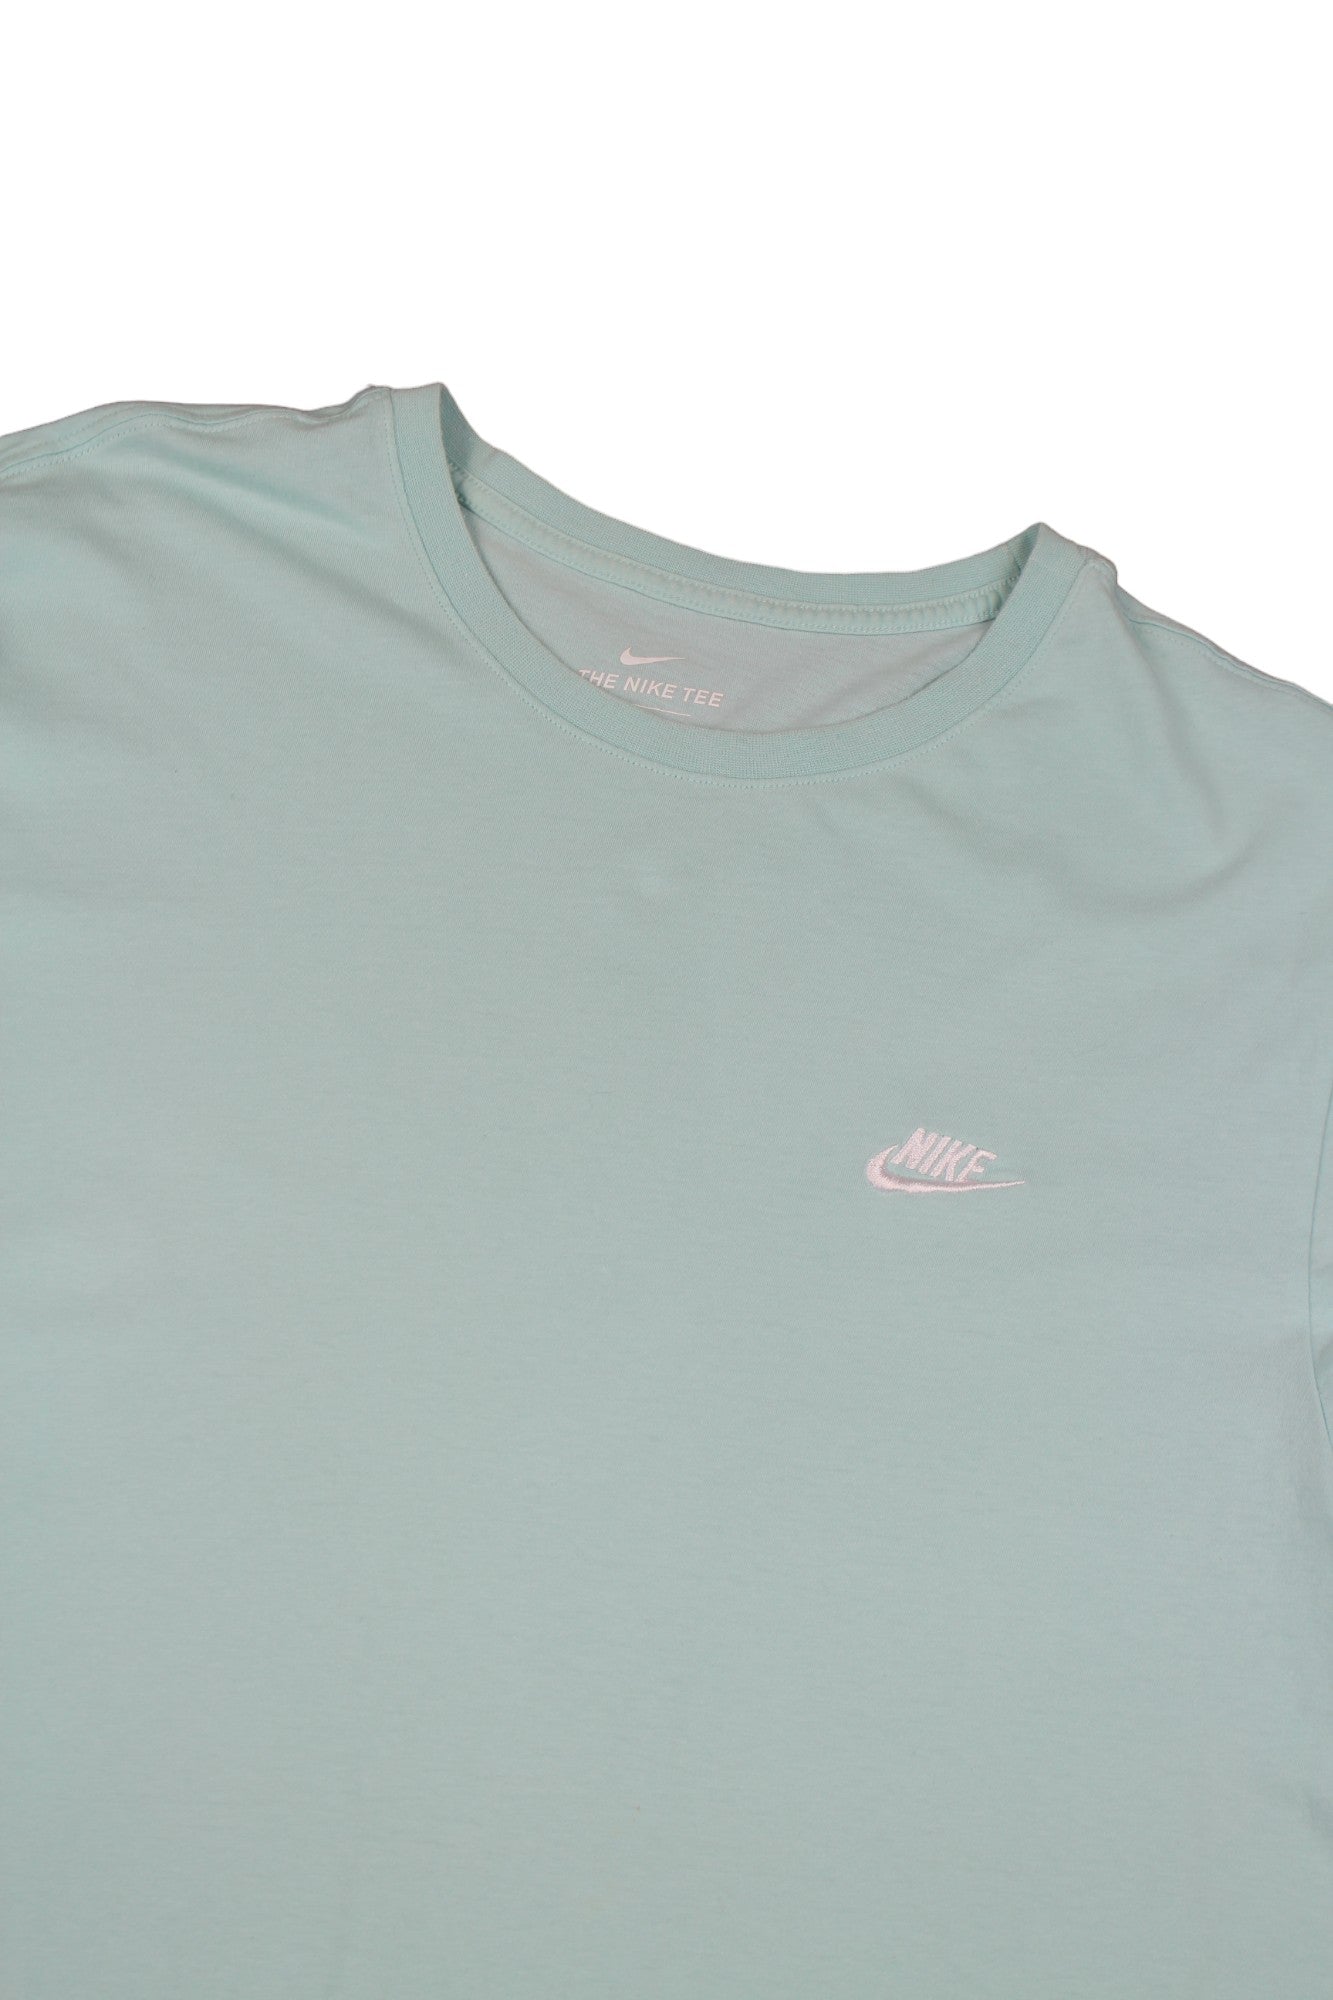 Nike Blue T-Shirt (XL)